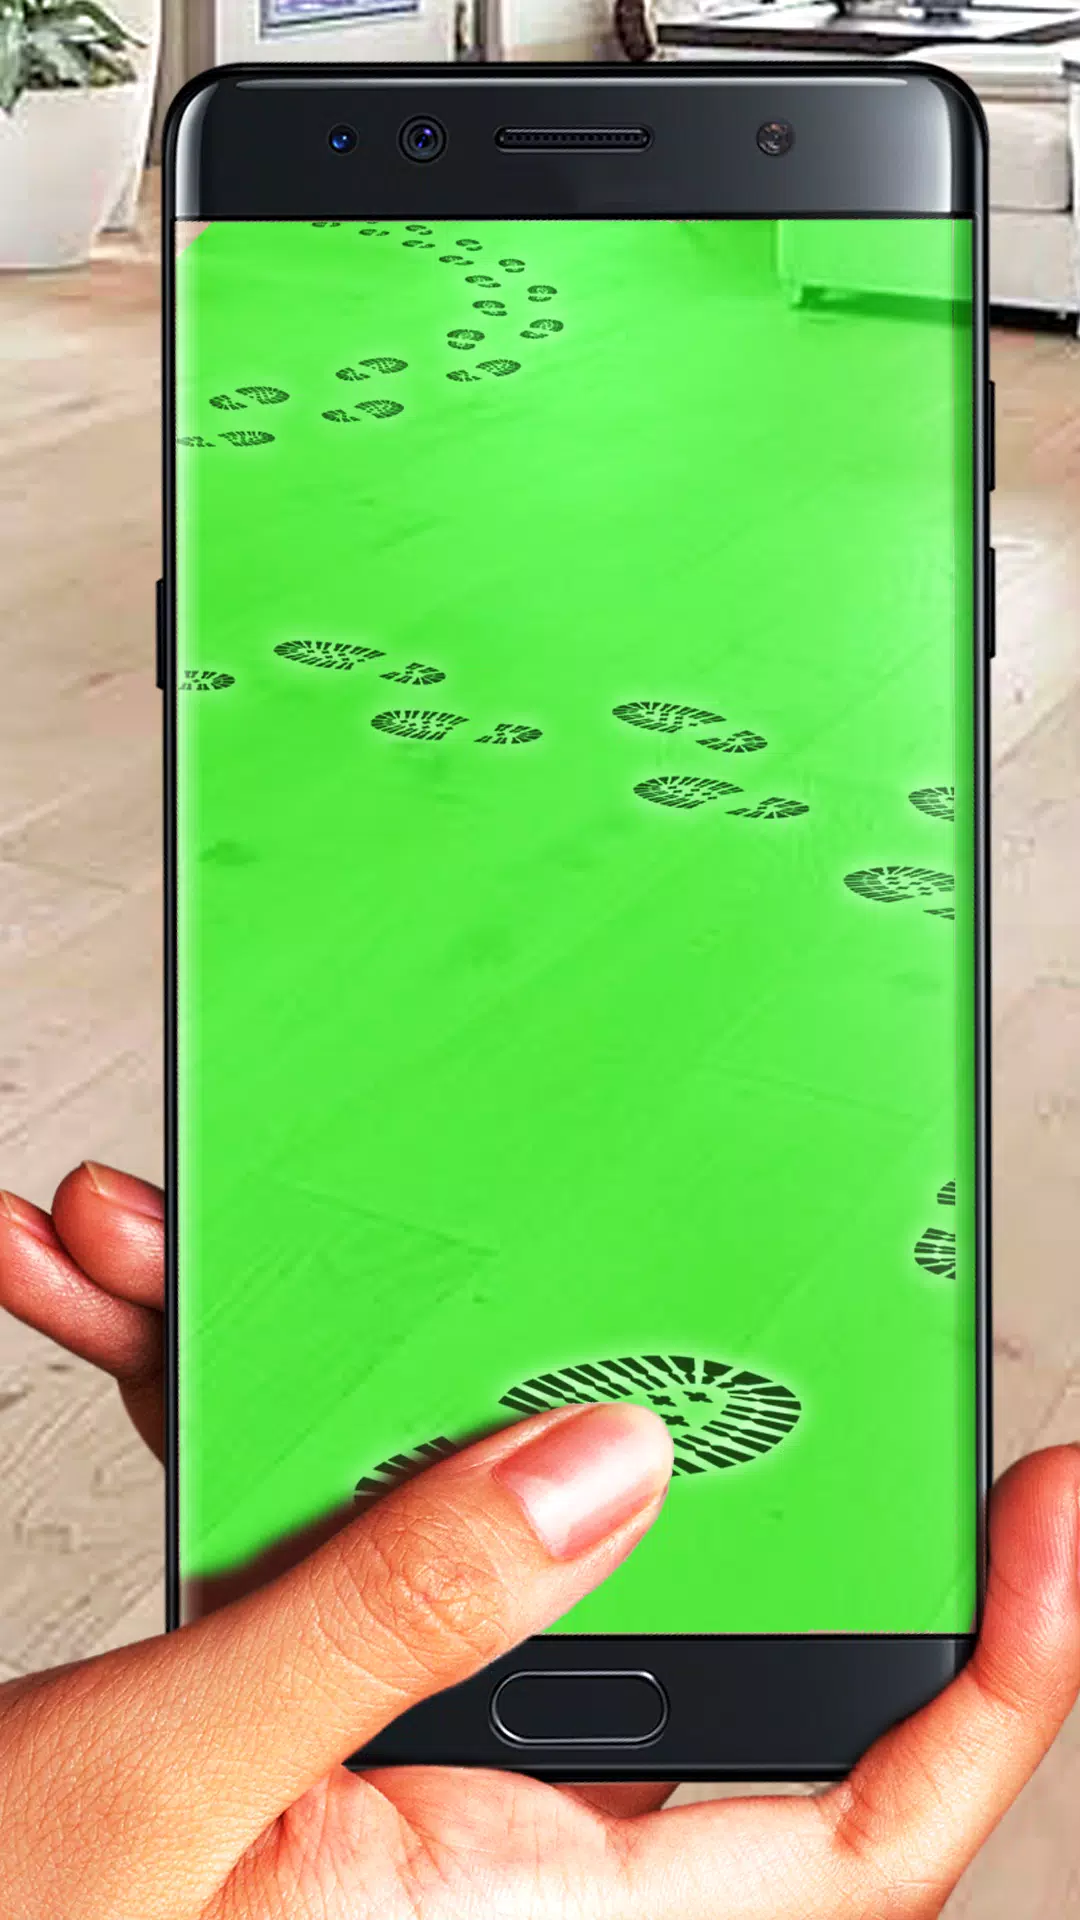 Footprints path scanner joke APK for Android Download